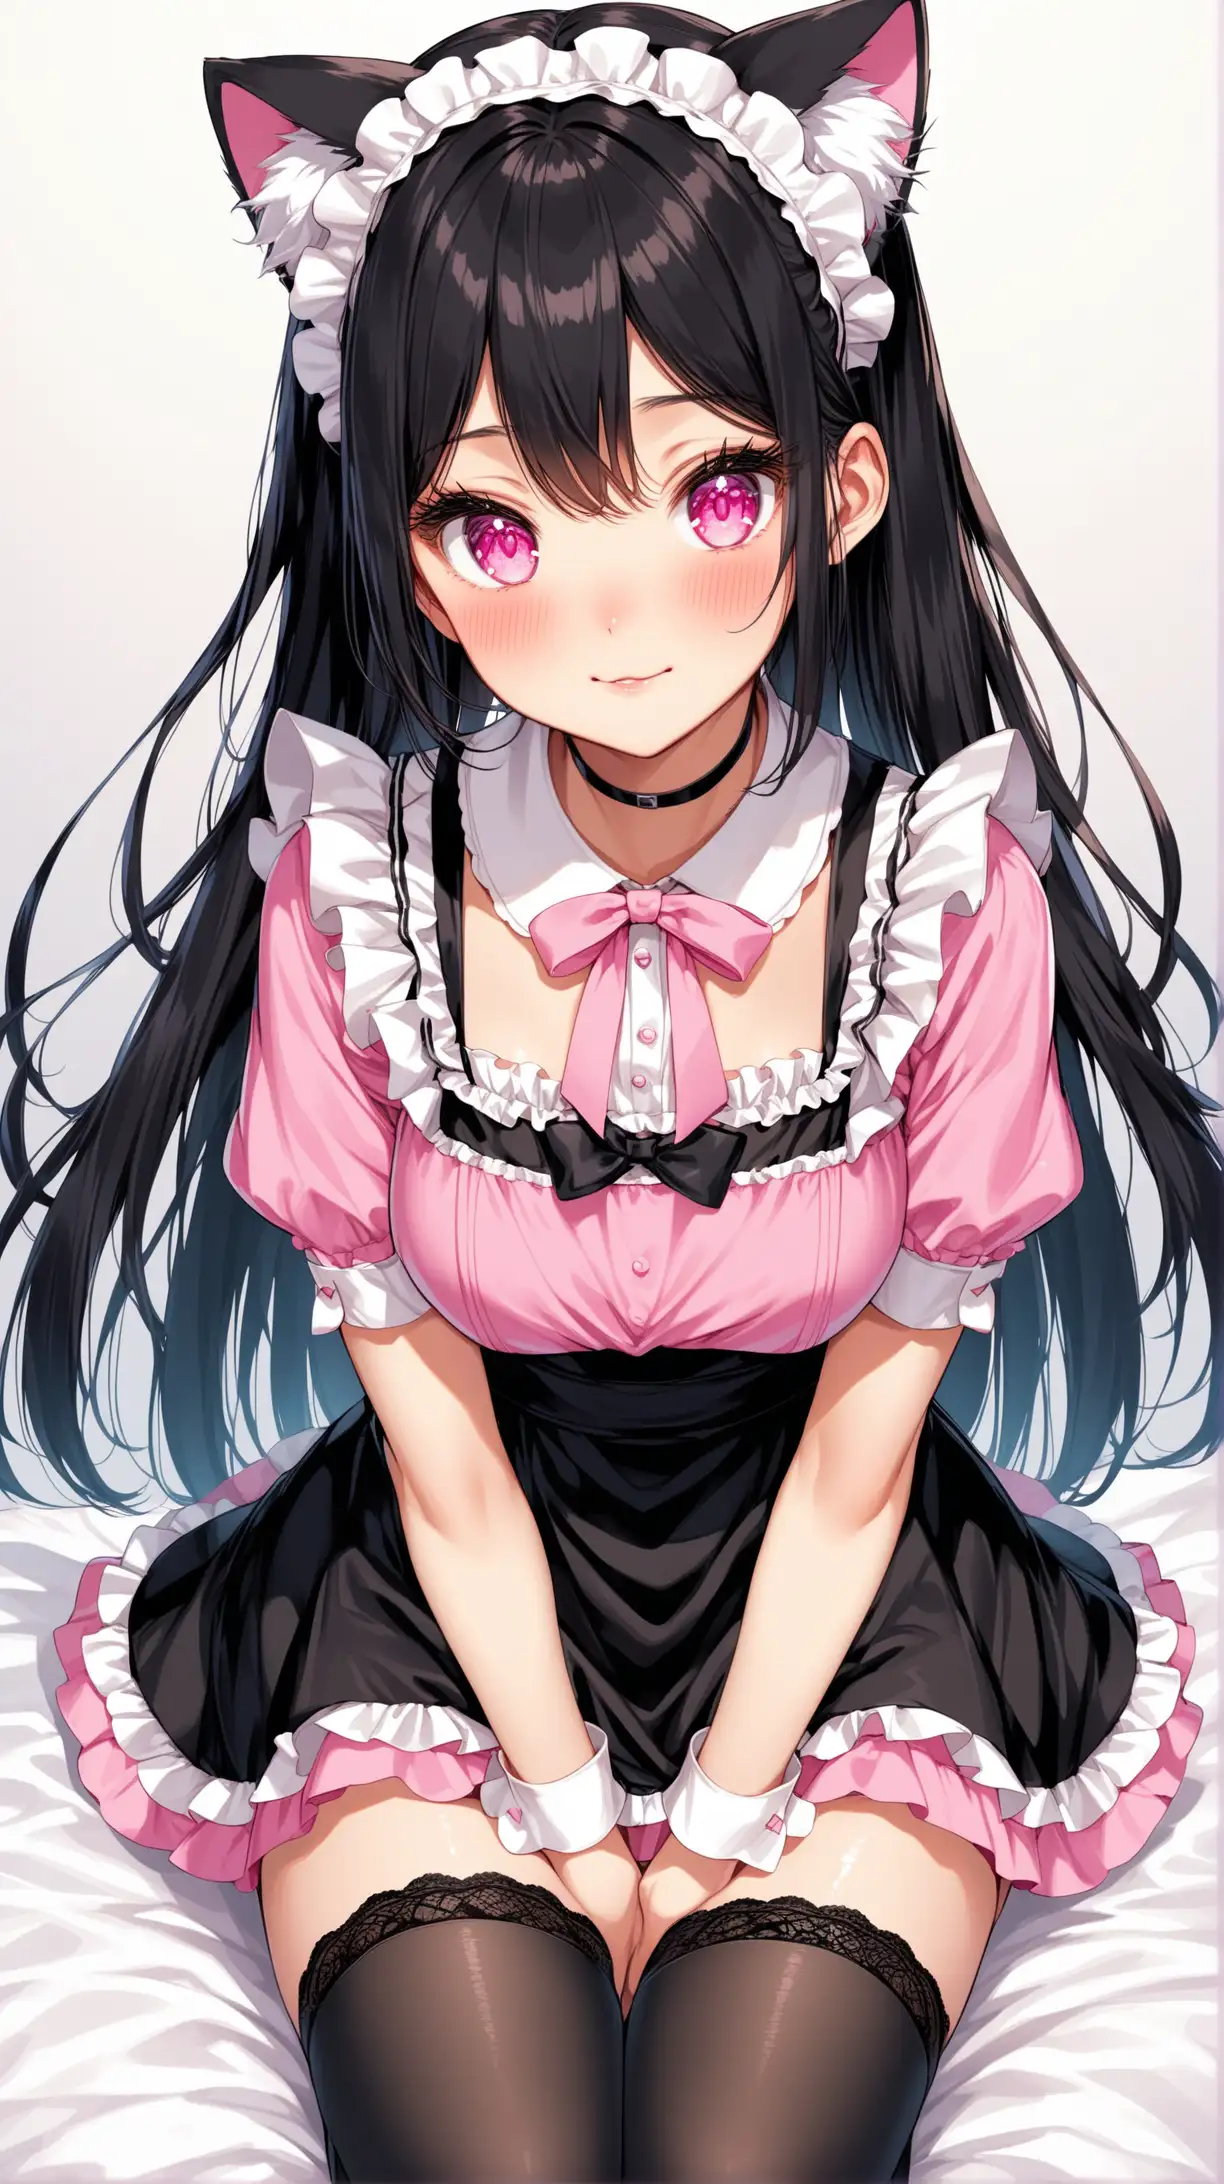 Anime Illustration of Cute Cat Girl in Black Maid Uniform